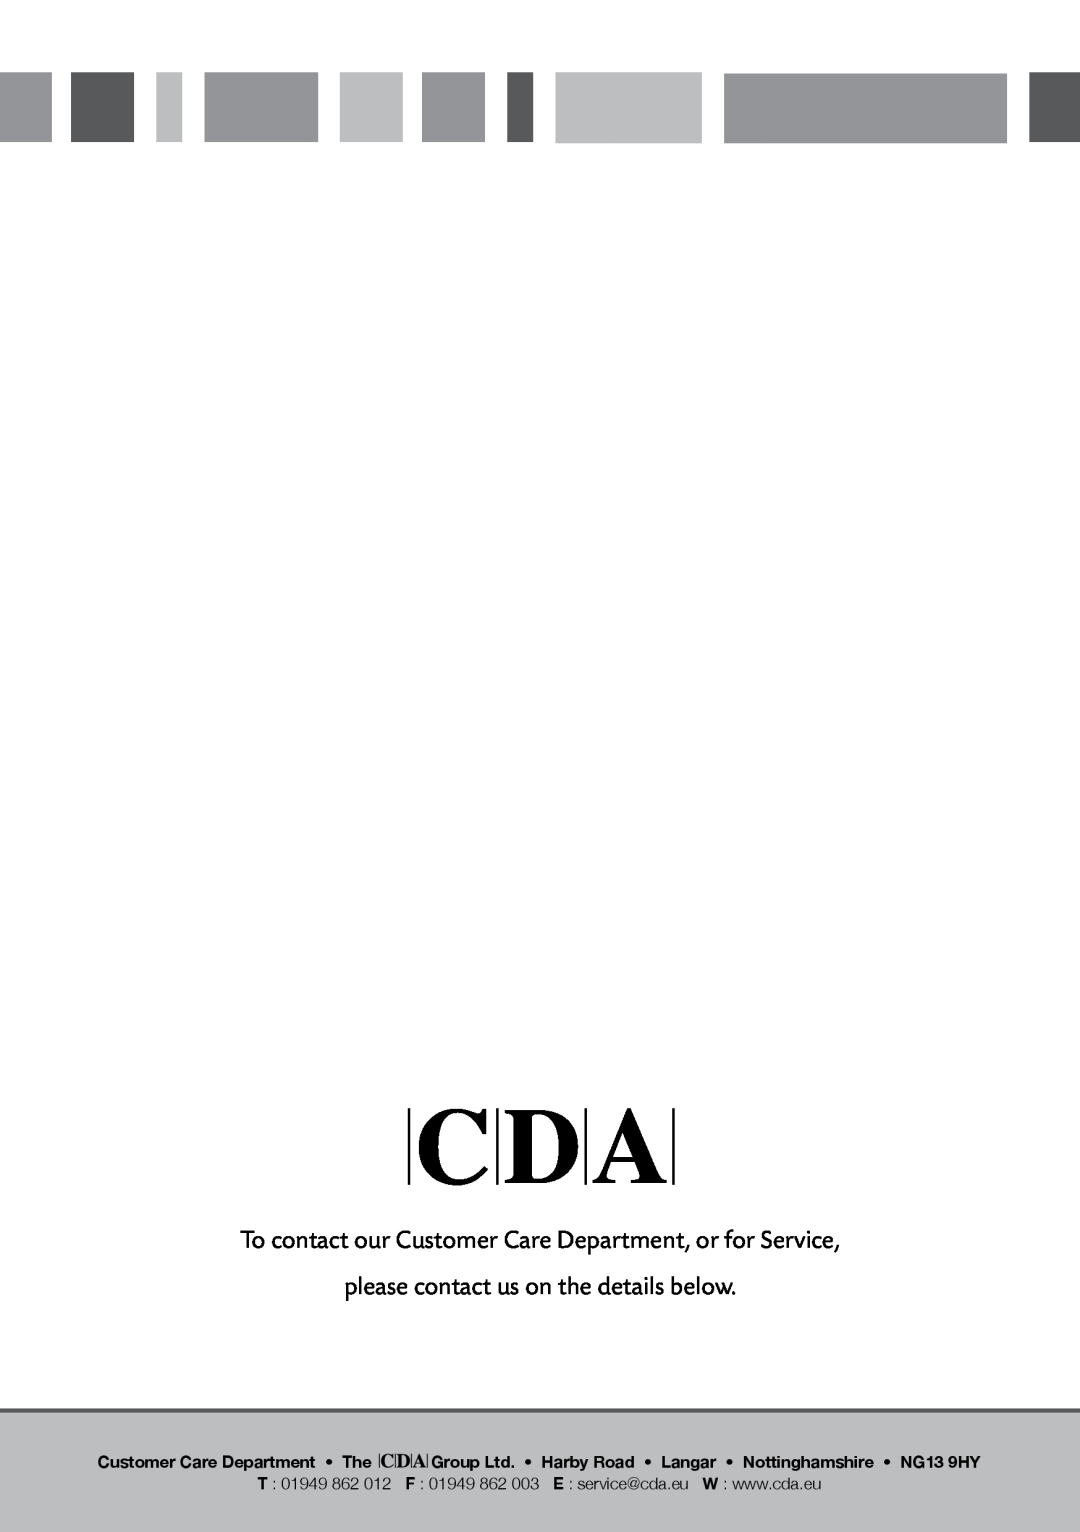 CDA CIGE9 manual please contact us on the details below 